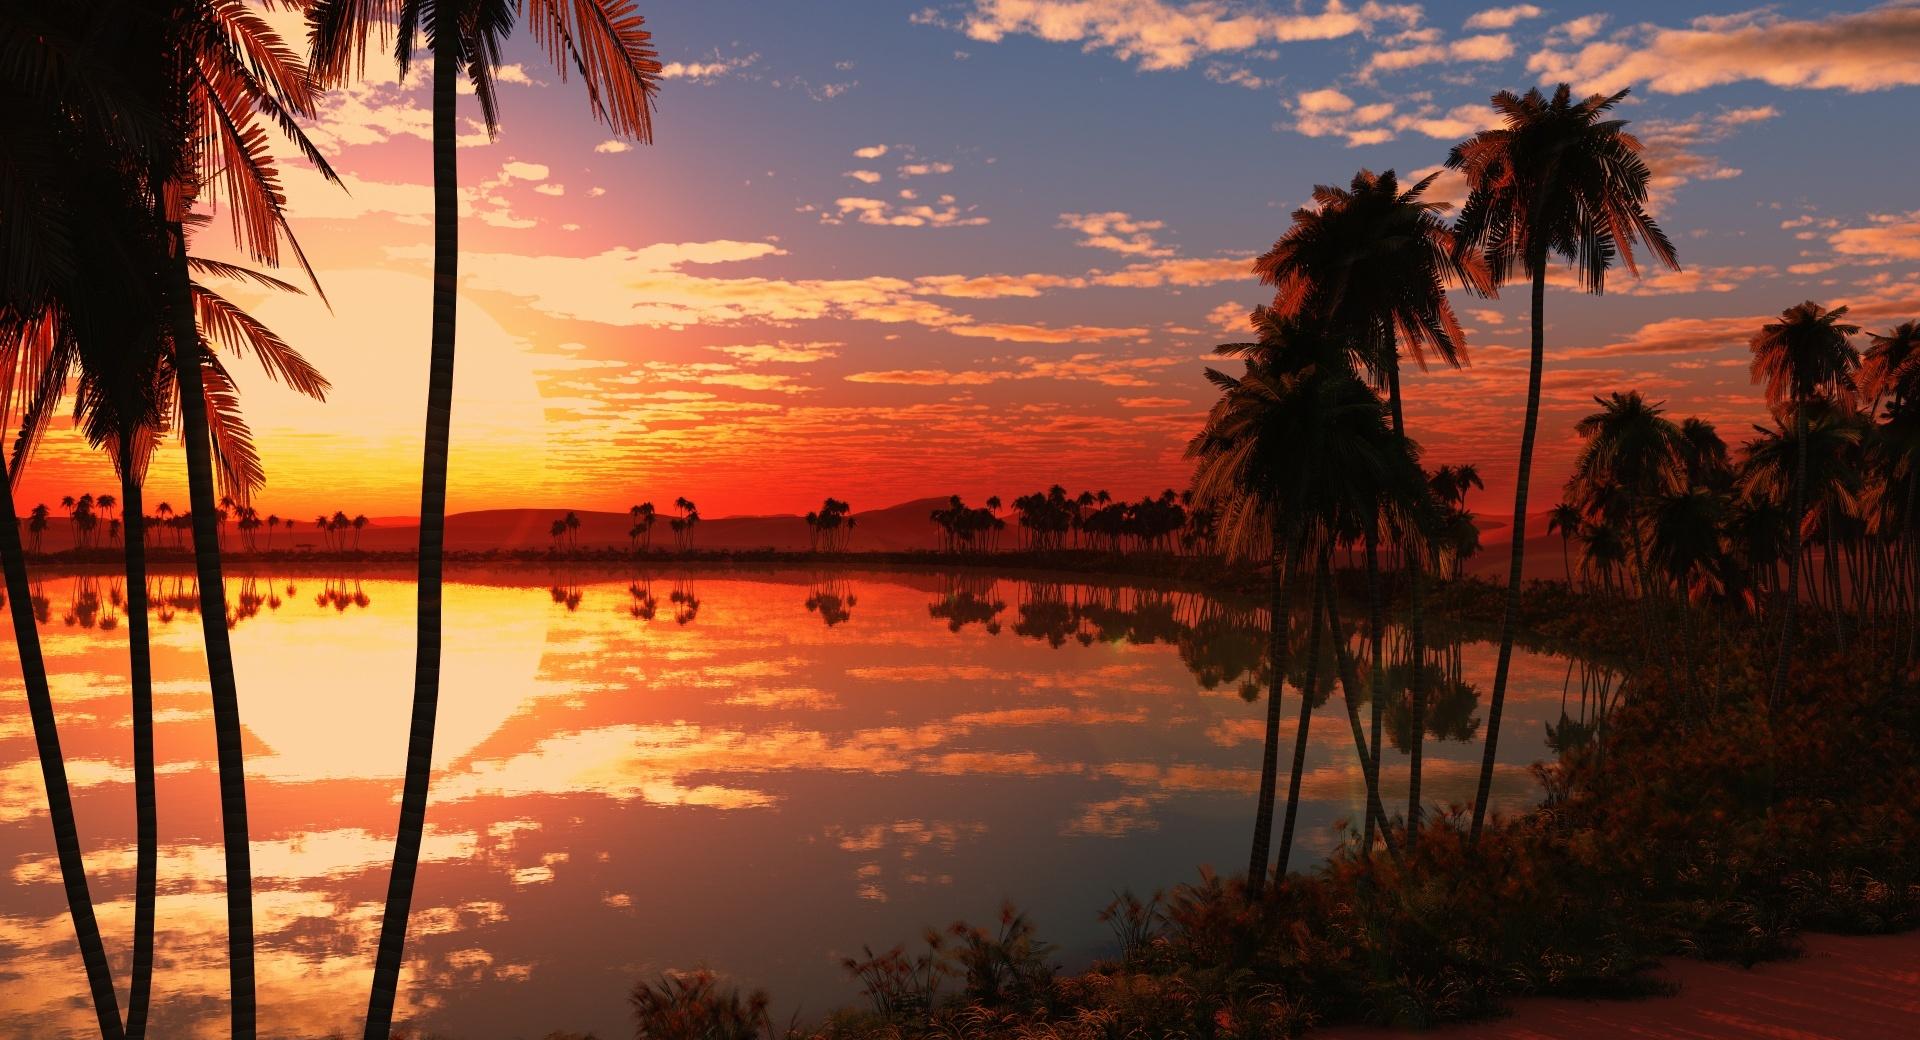 Beautiful Lake Sunset at 1024 x 768 size wallpapers HD quality